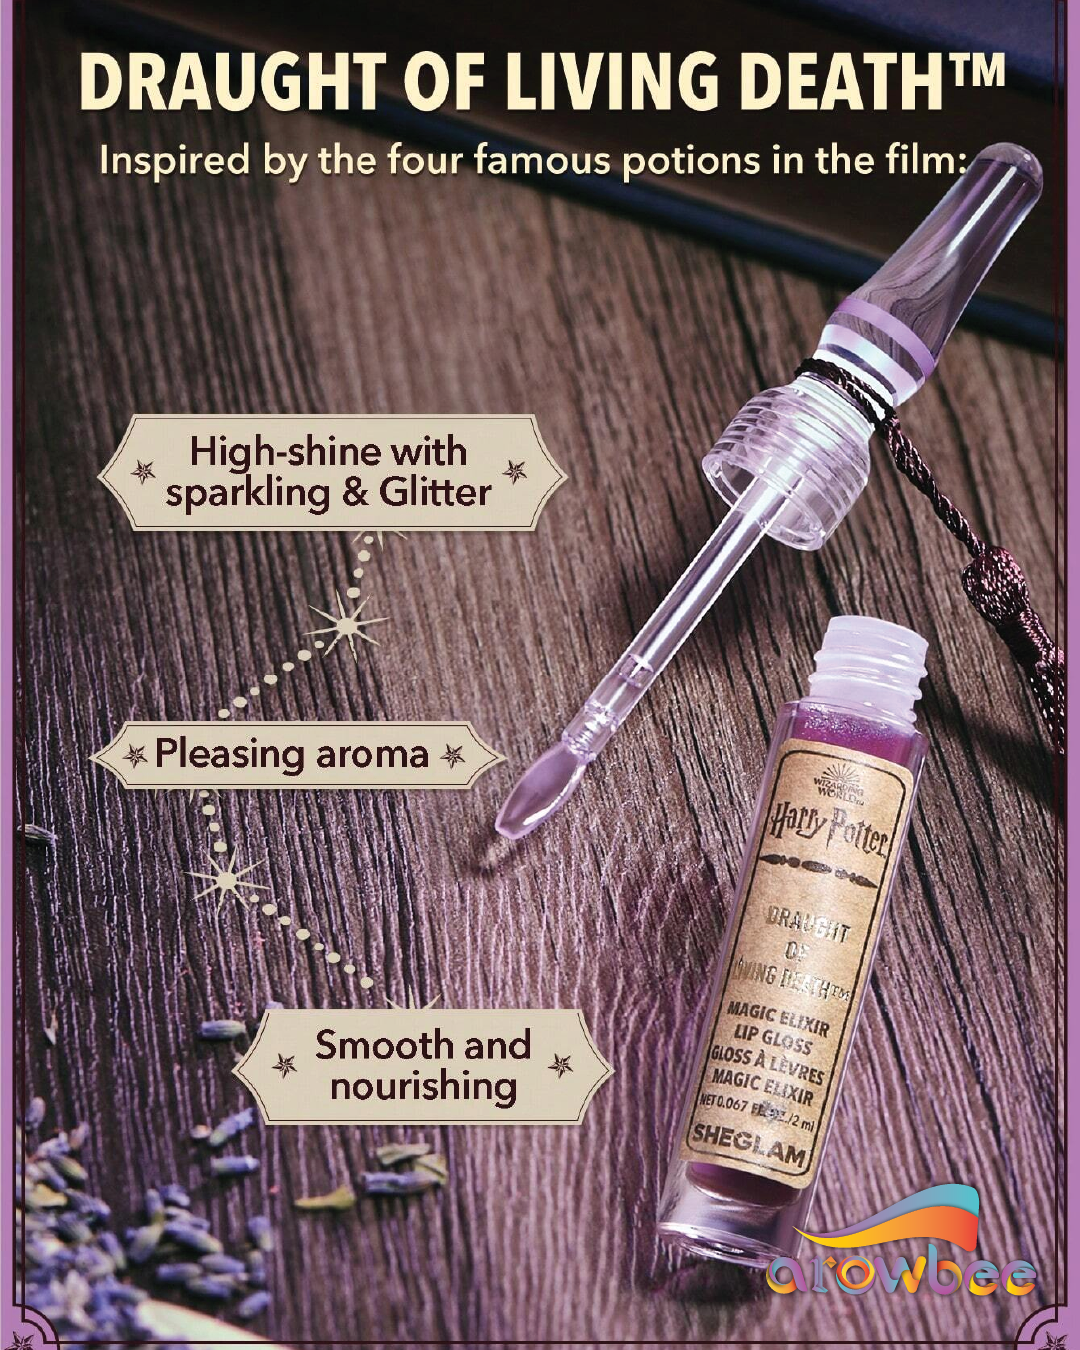 SHEGLAM Harry Potter™ Magic Elixir Lip Gloss